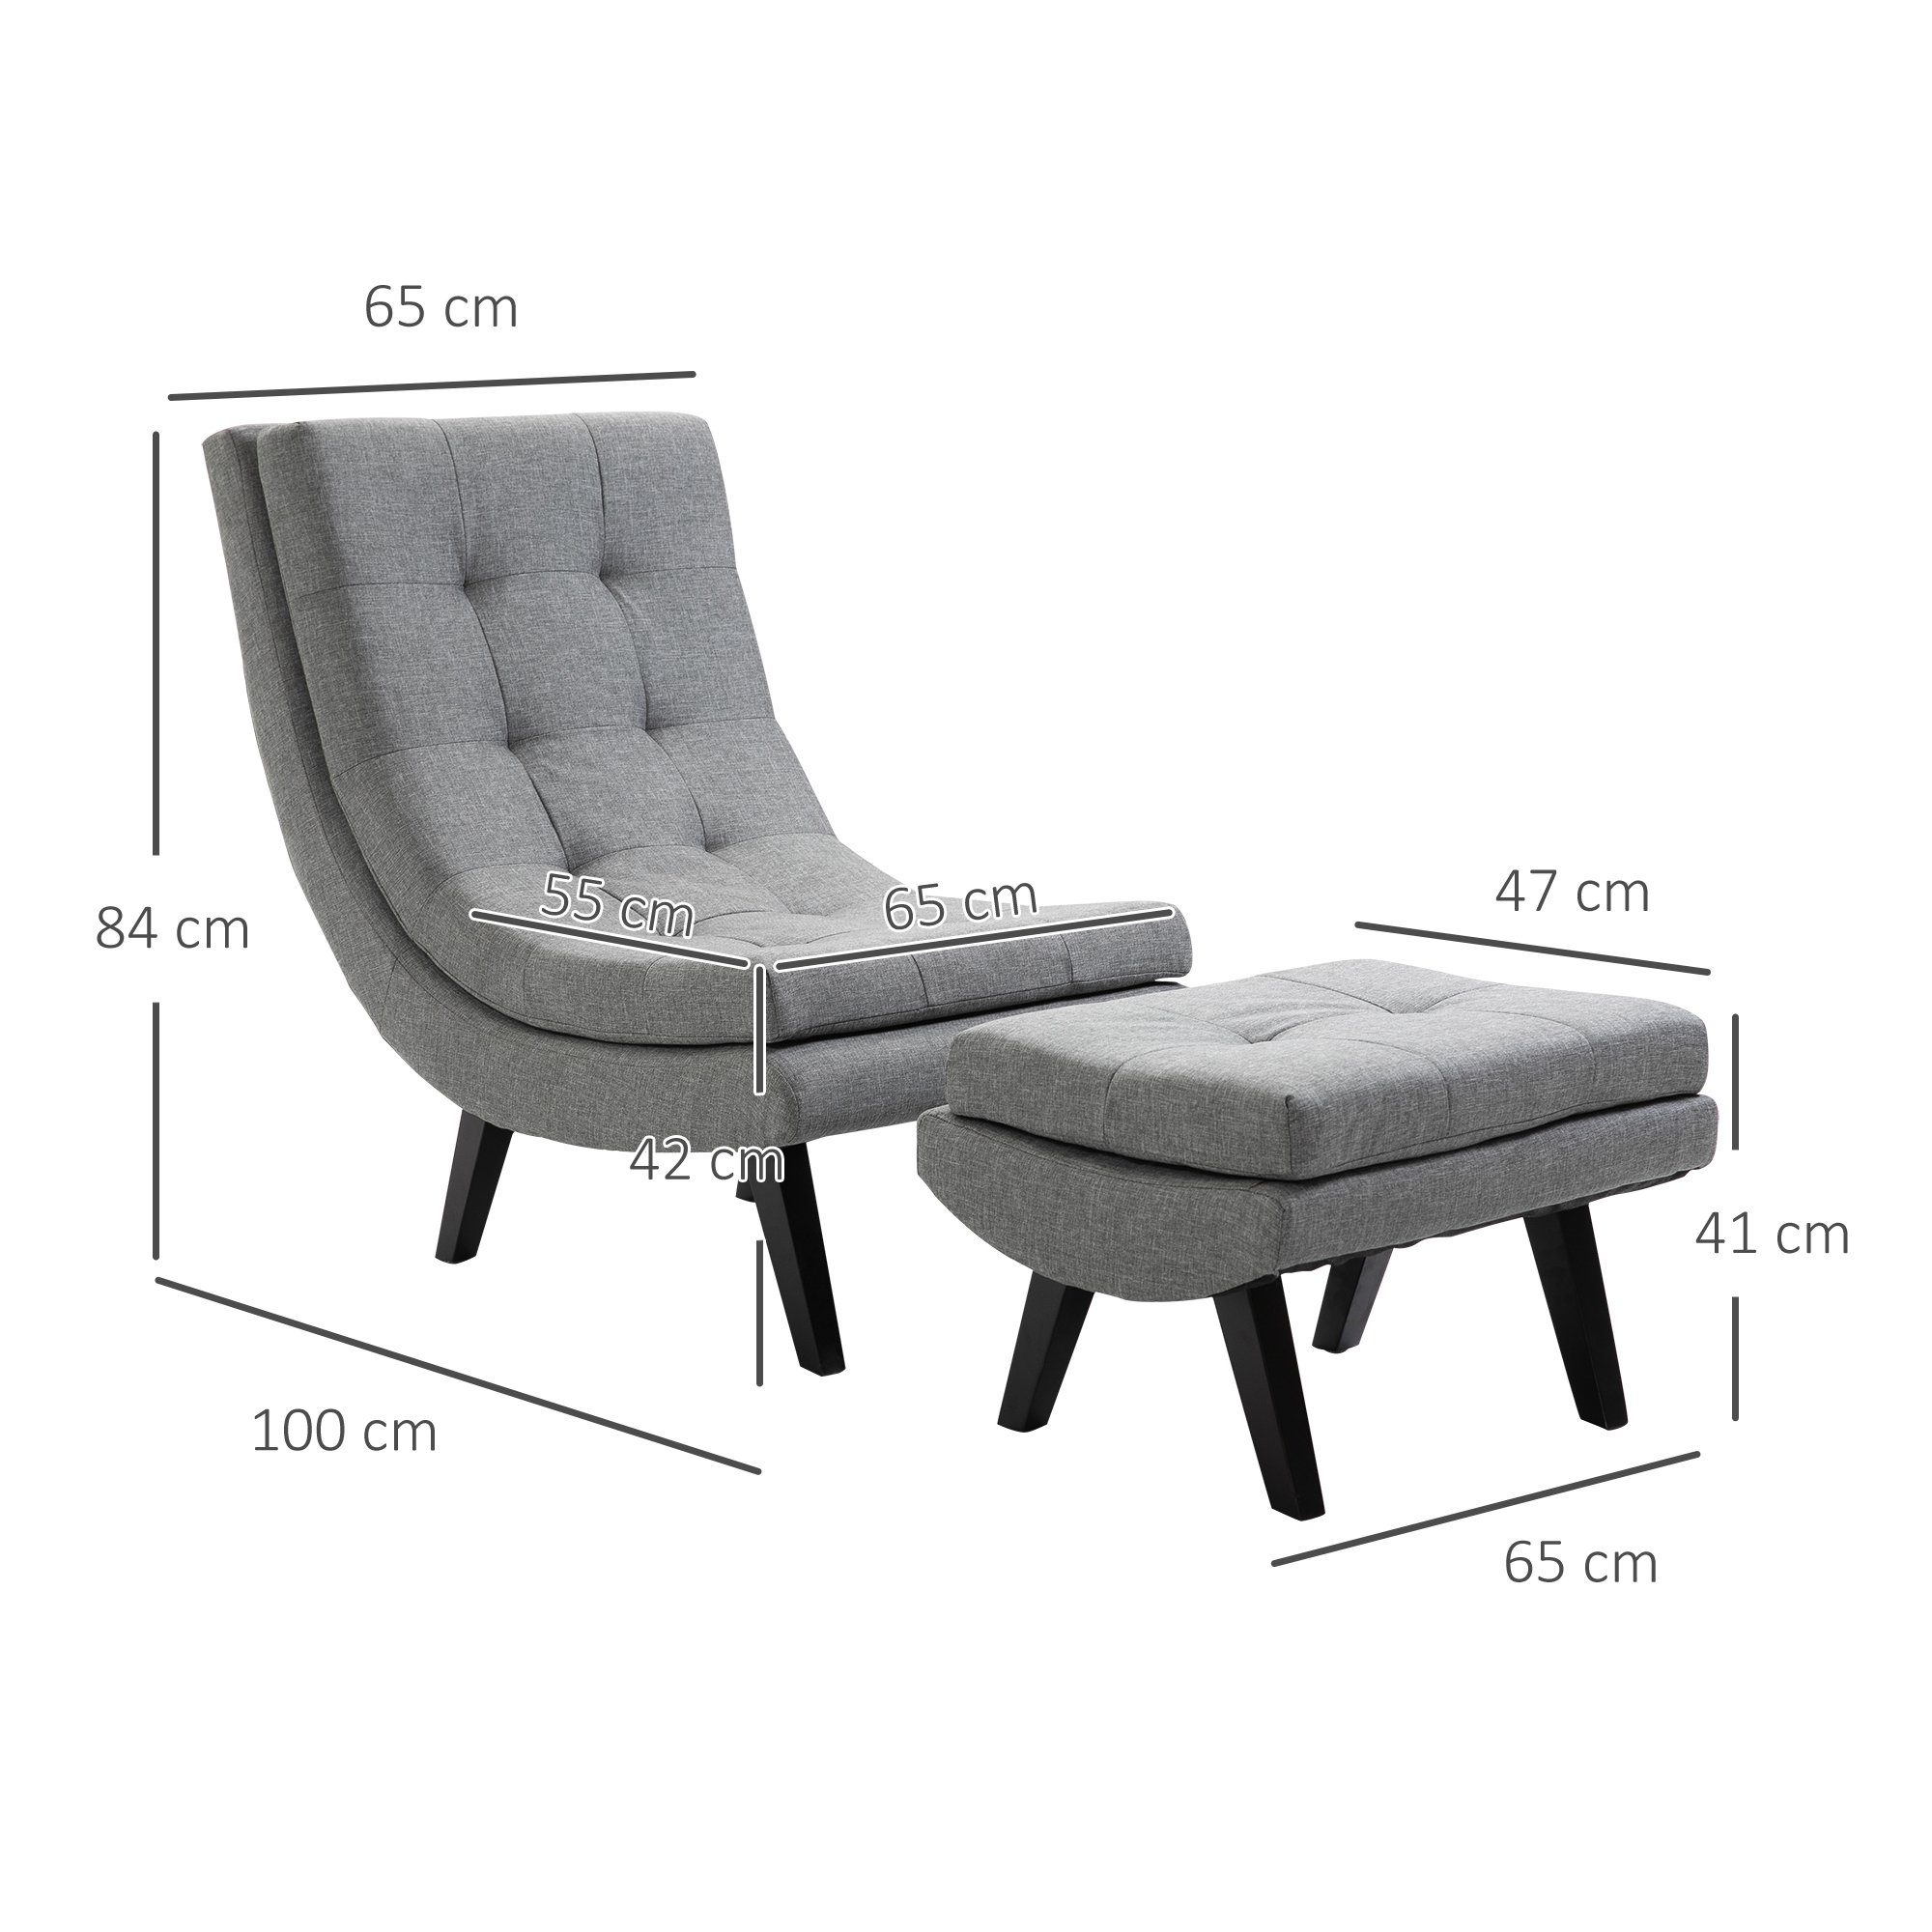 Kautschukholzbeine Sessel, Chaiselongue Relaxsessel HOMCOM Relaxliege Fußhocker mit Leinen Sessel grau